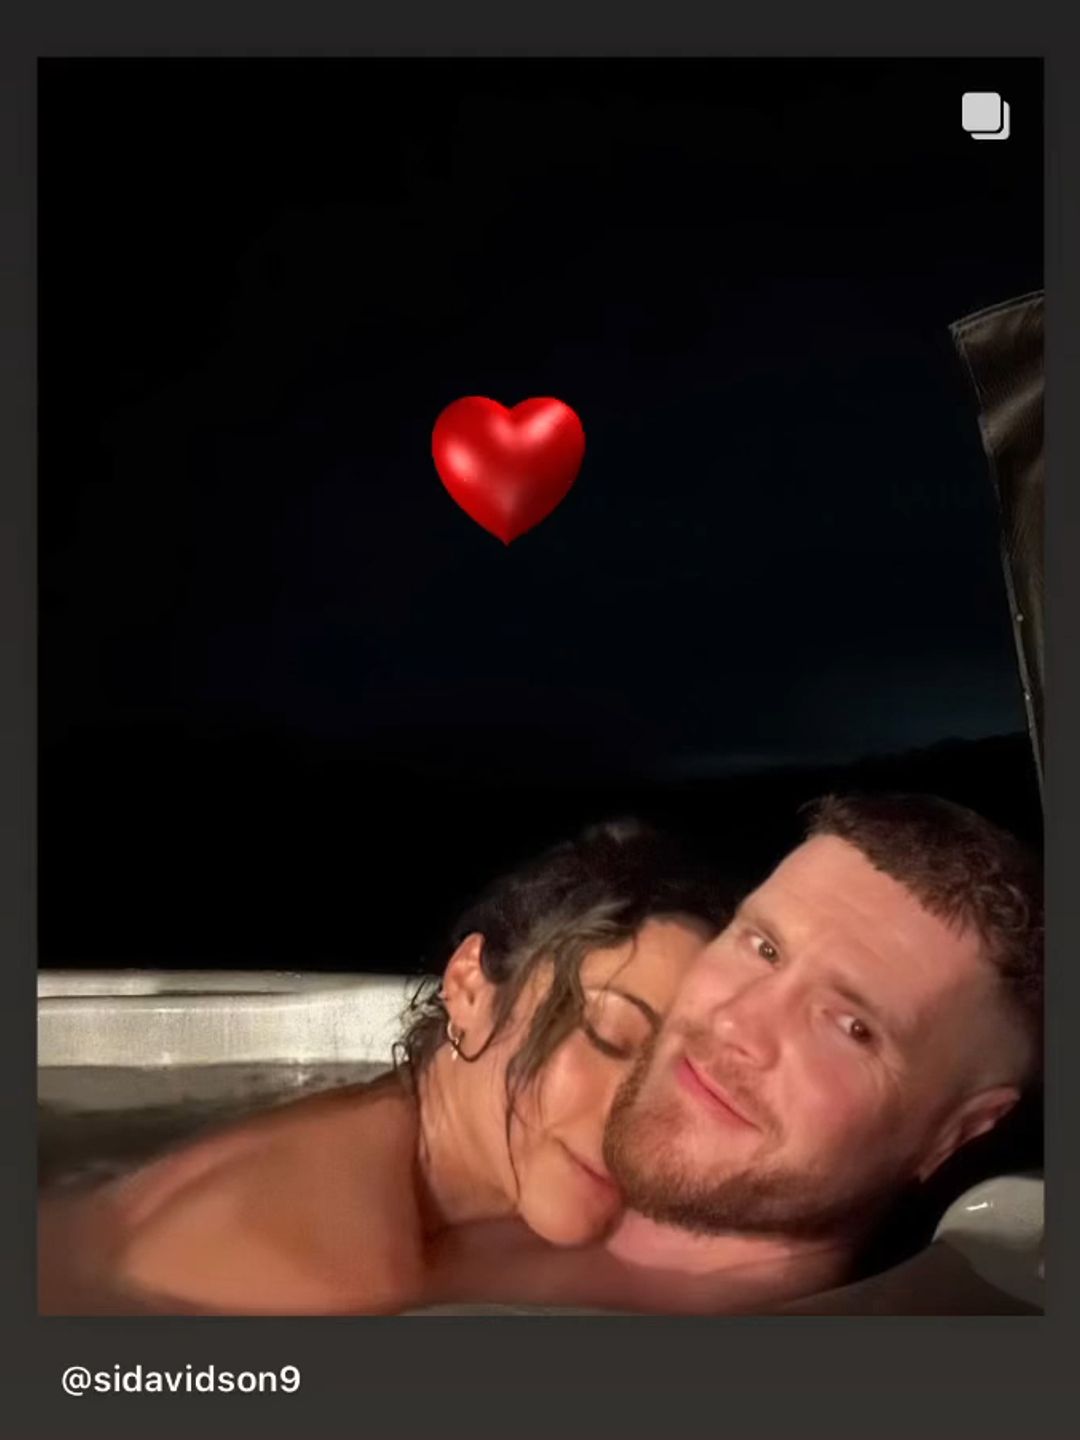 Karen Hauer hugging her partner Simon in the hot tub at night